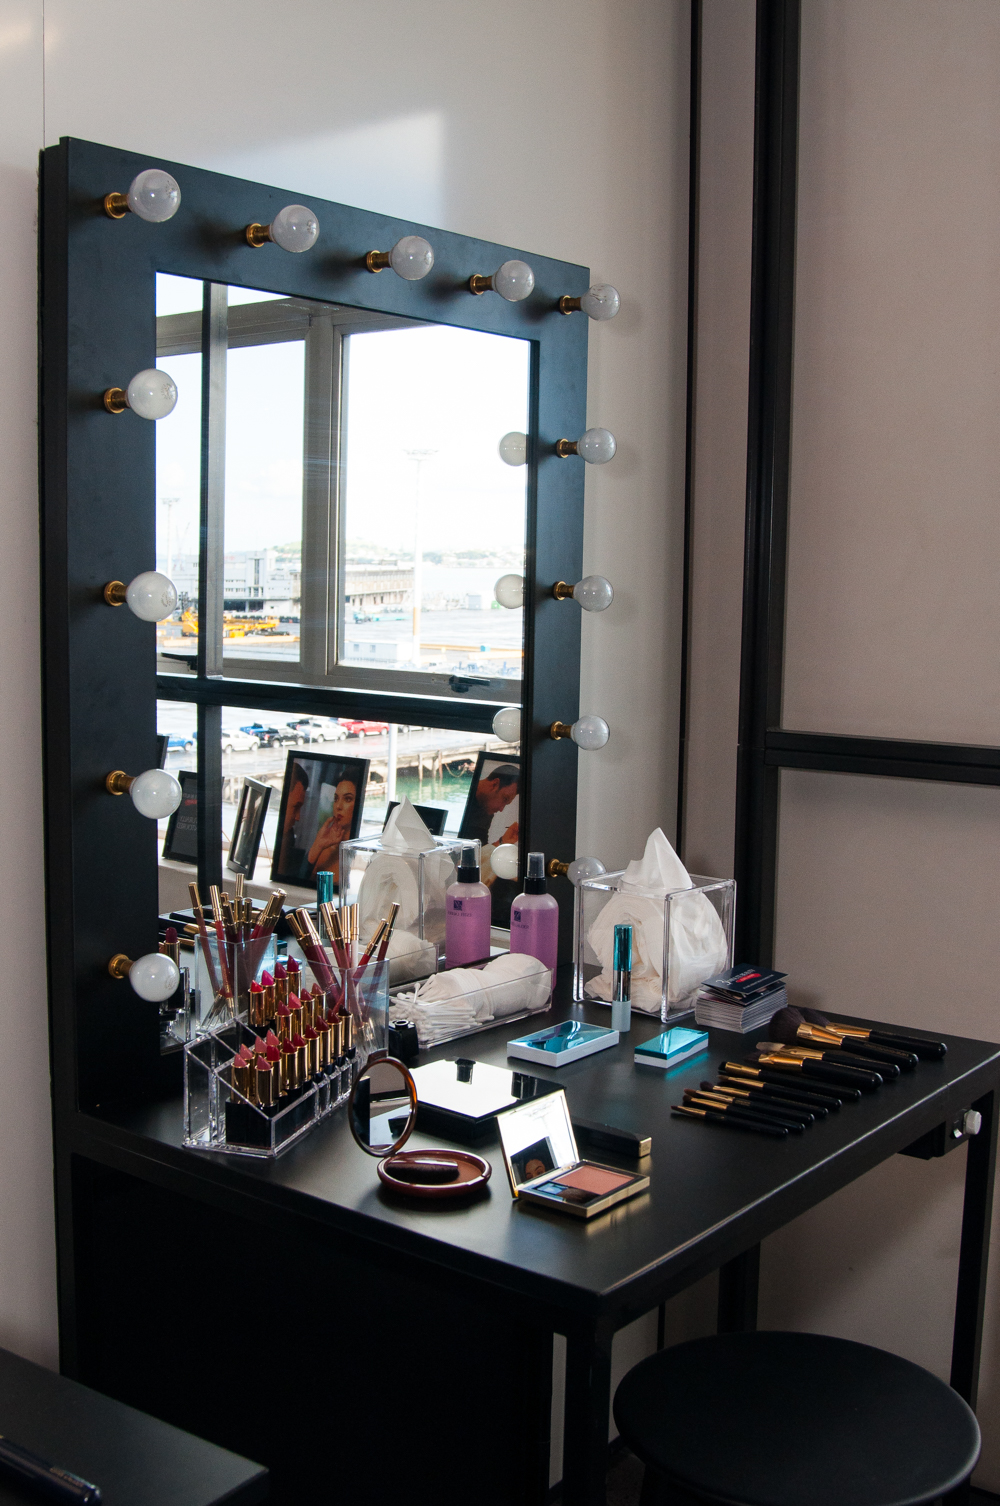 The Estée Lauder makeup stations prepped and ready.